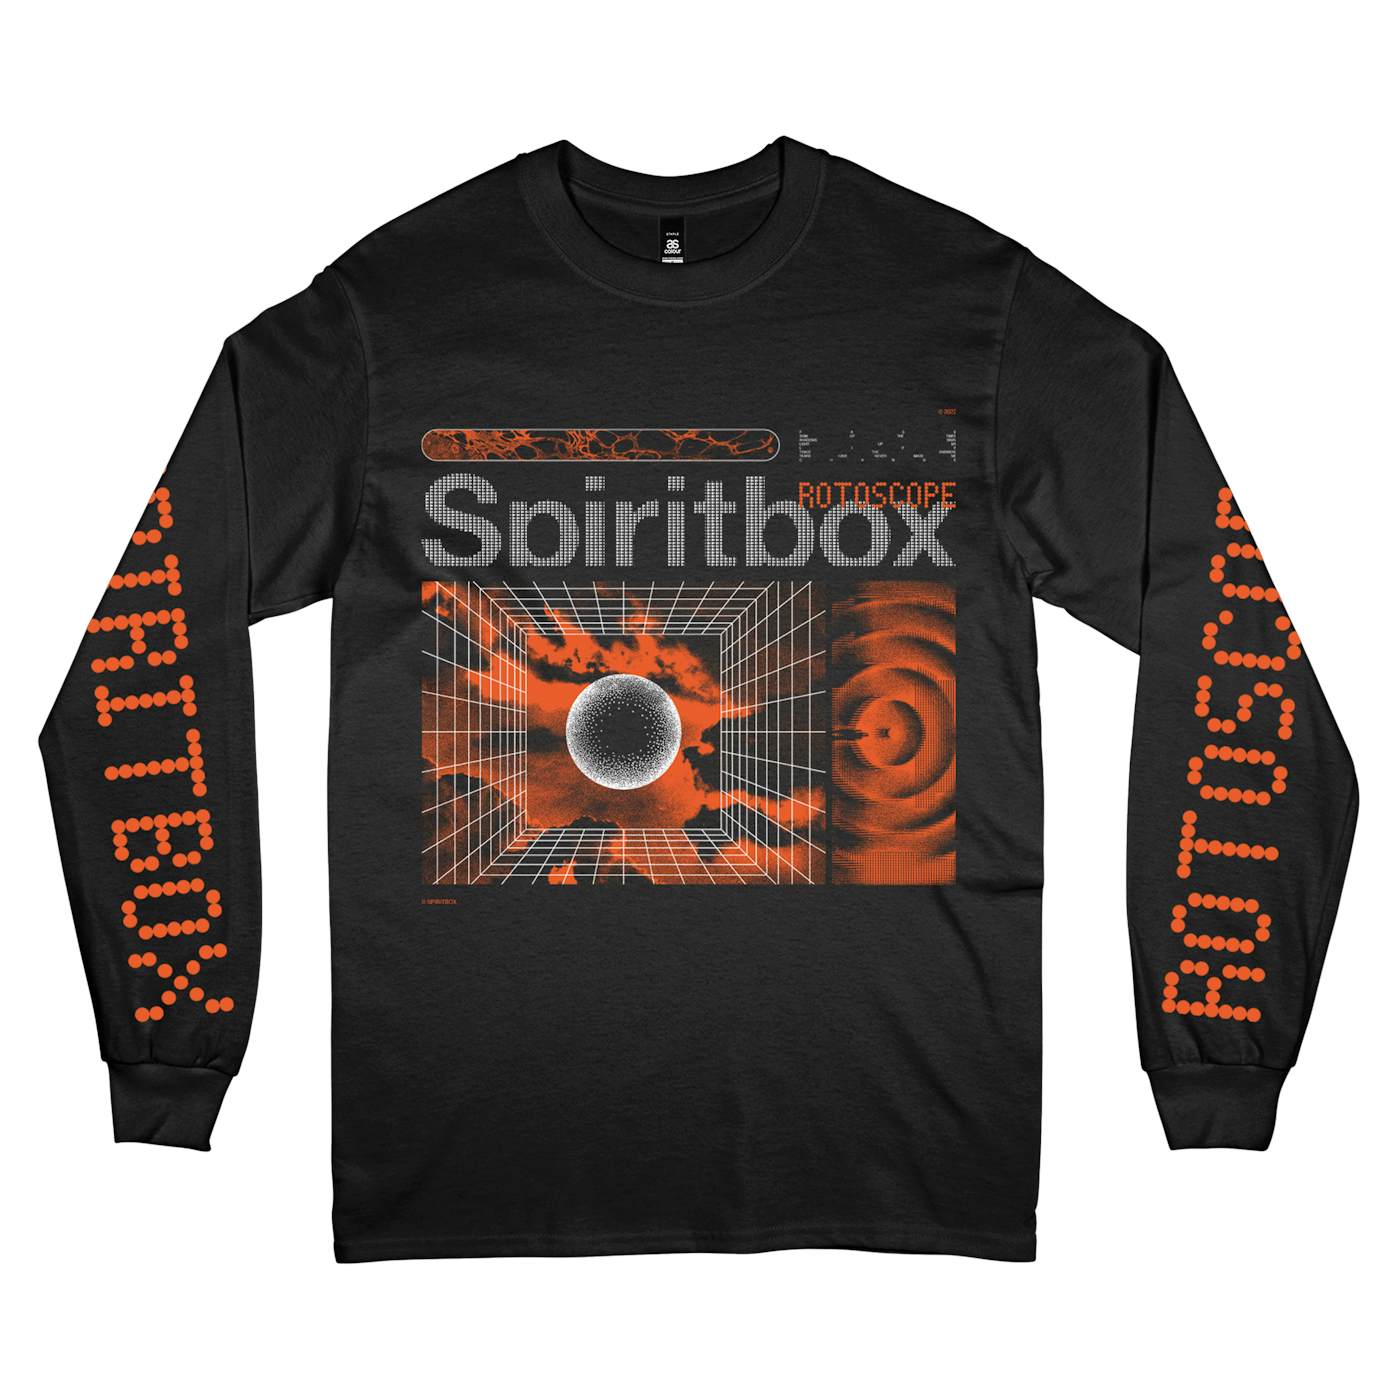 Spiritbox "Rotoscope" L/S T-Shirt